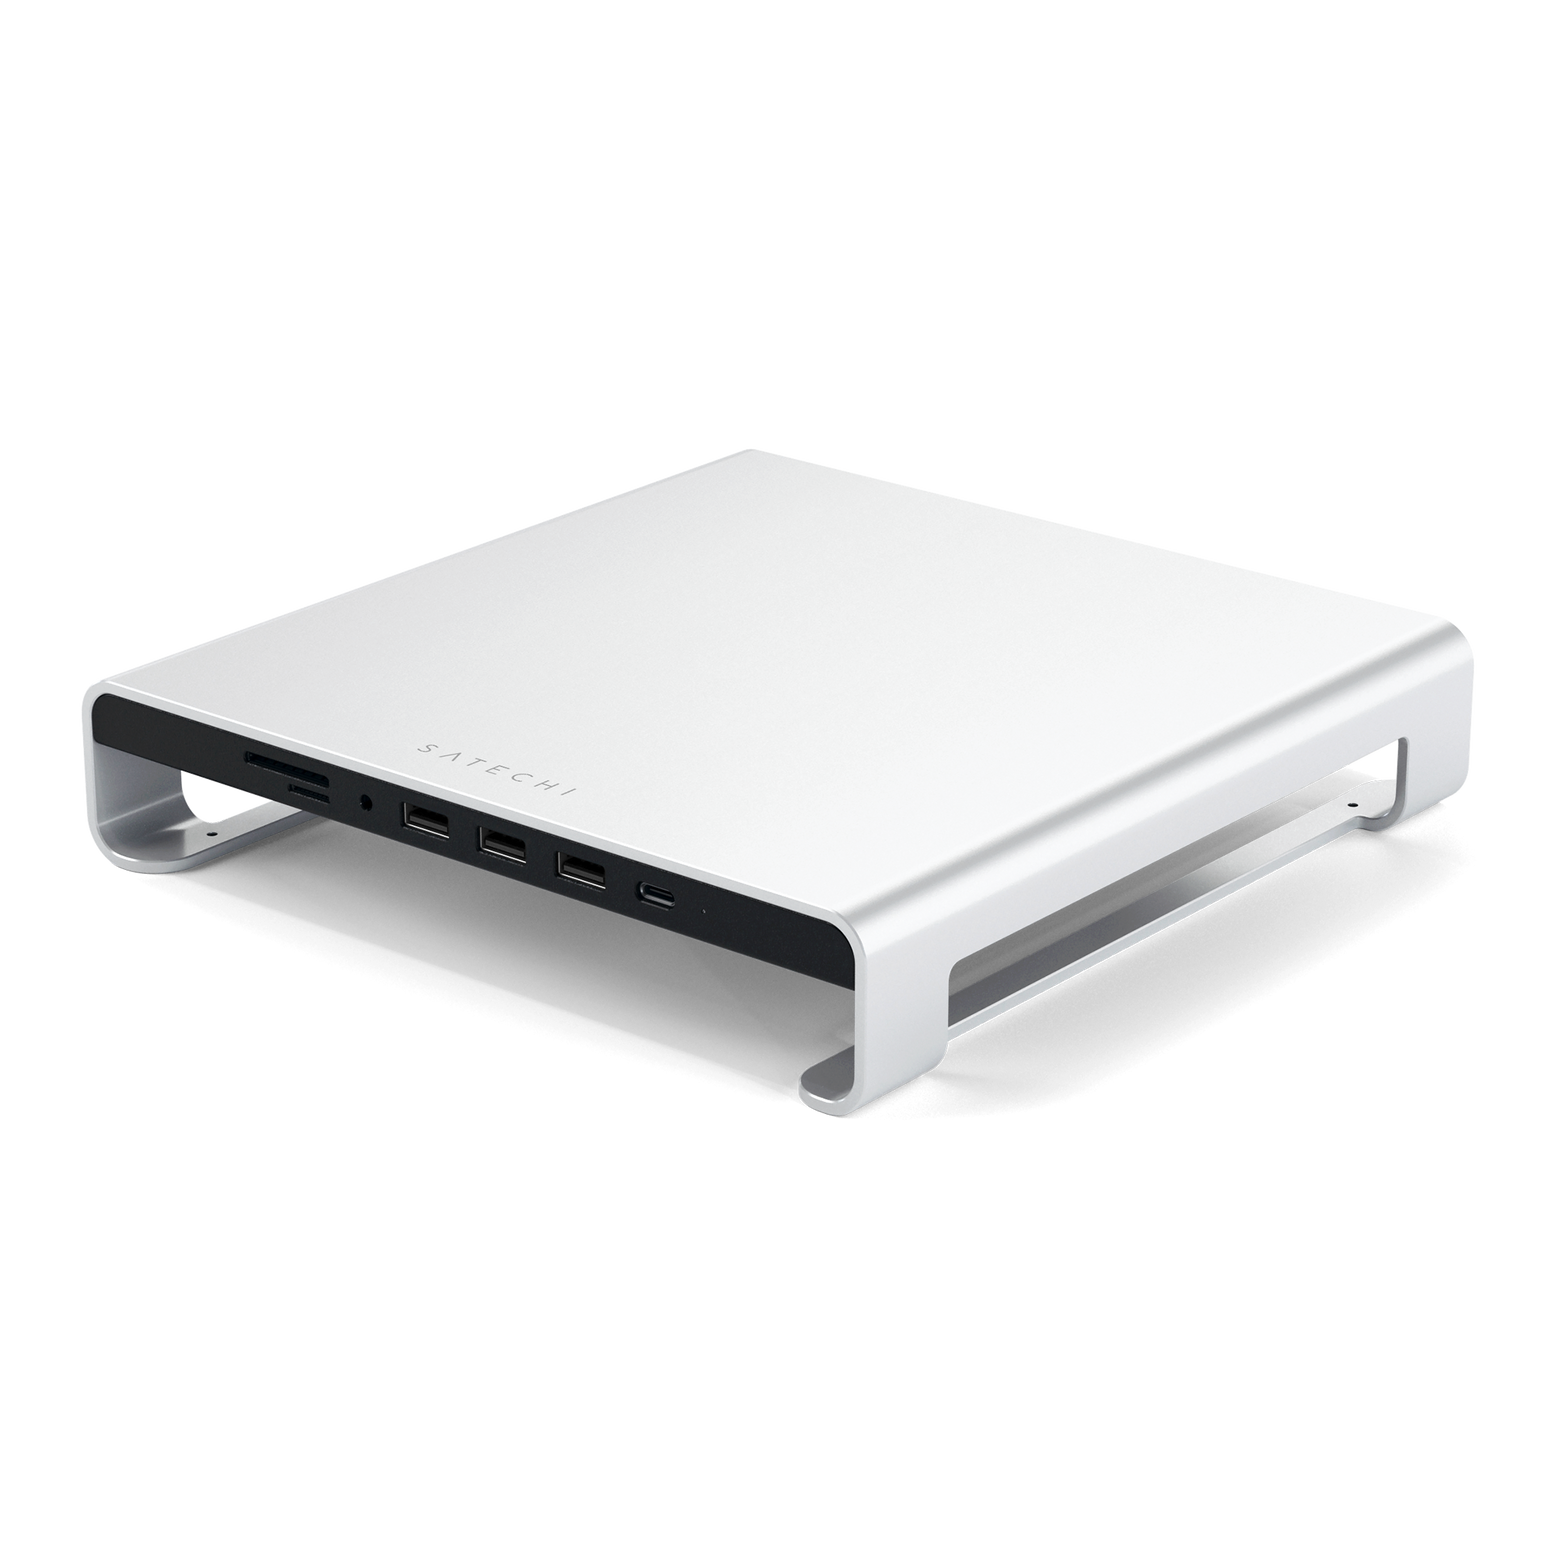 Satechi Aluminium Monitor Stand Hub for iMac - Silver - Discontinued